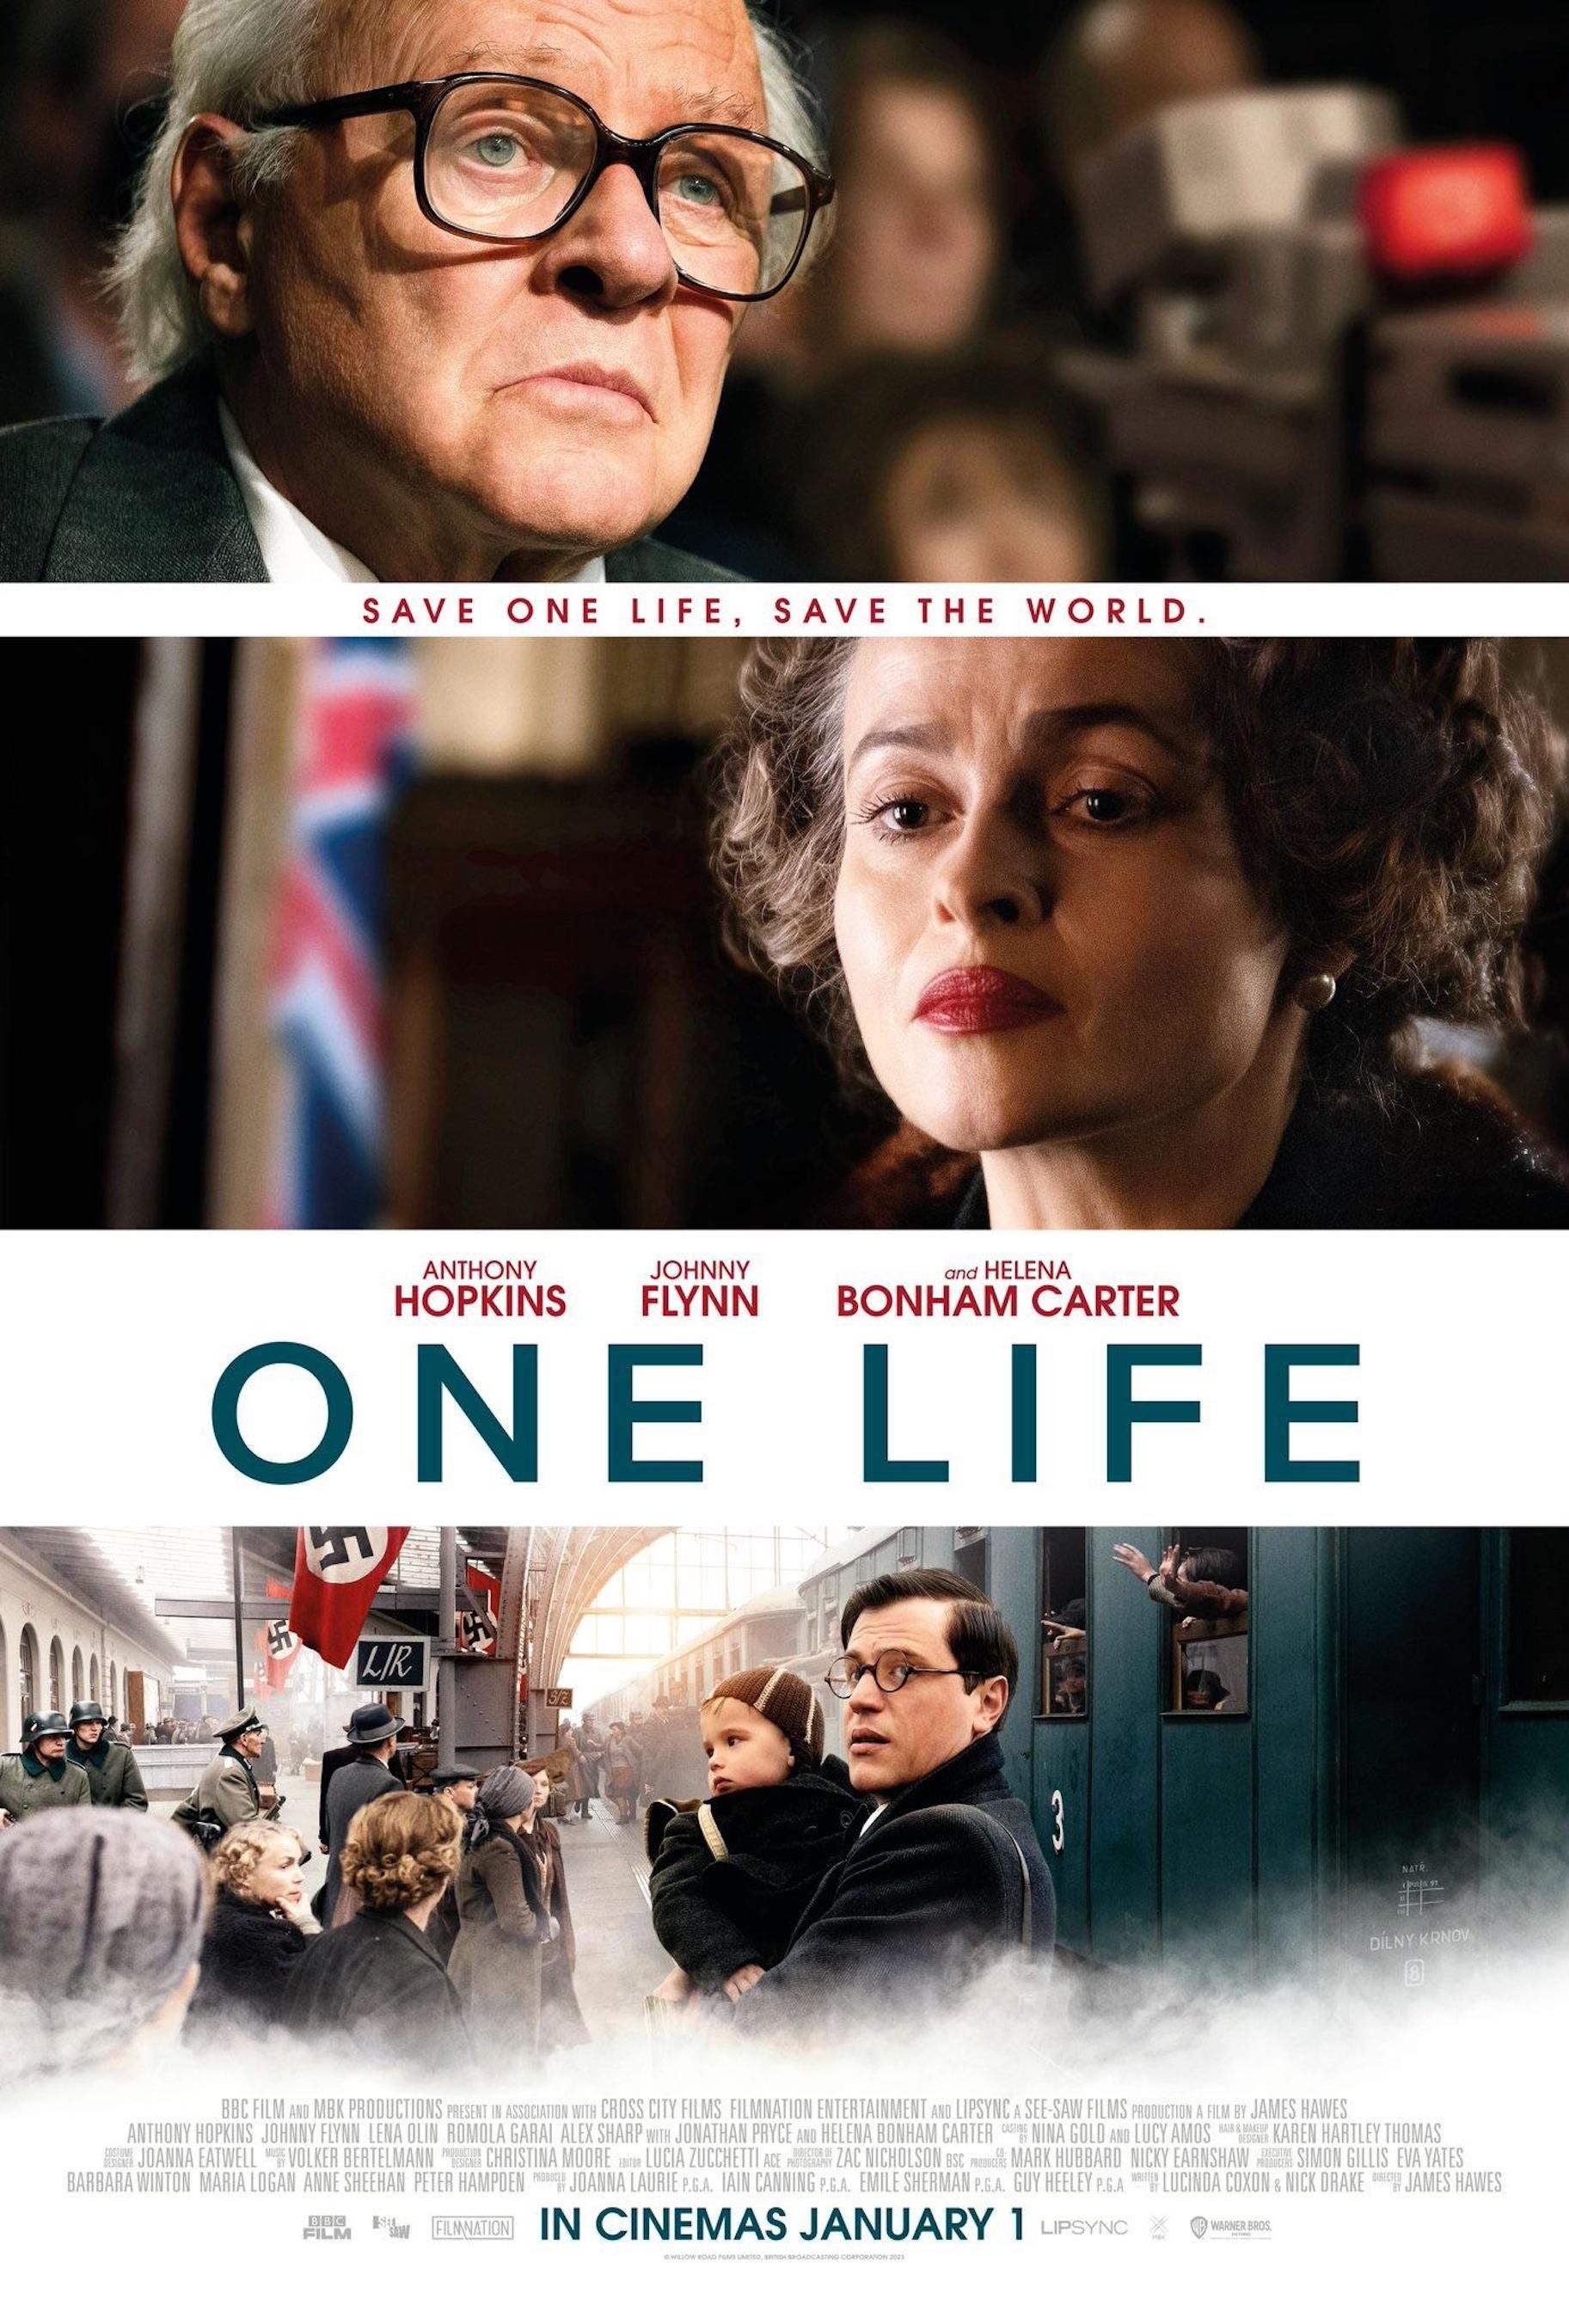 Anthony Hopkins, Johnny Flynn, and Helena Bonham Carter on One Life film poster